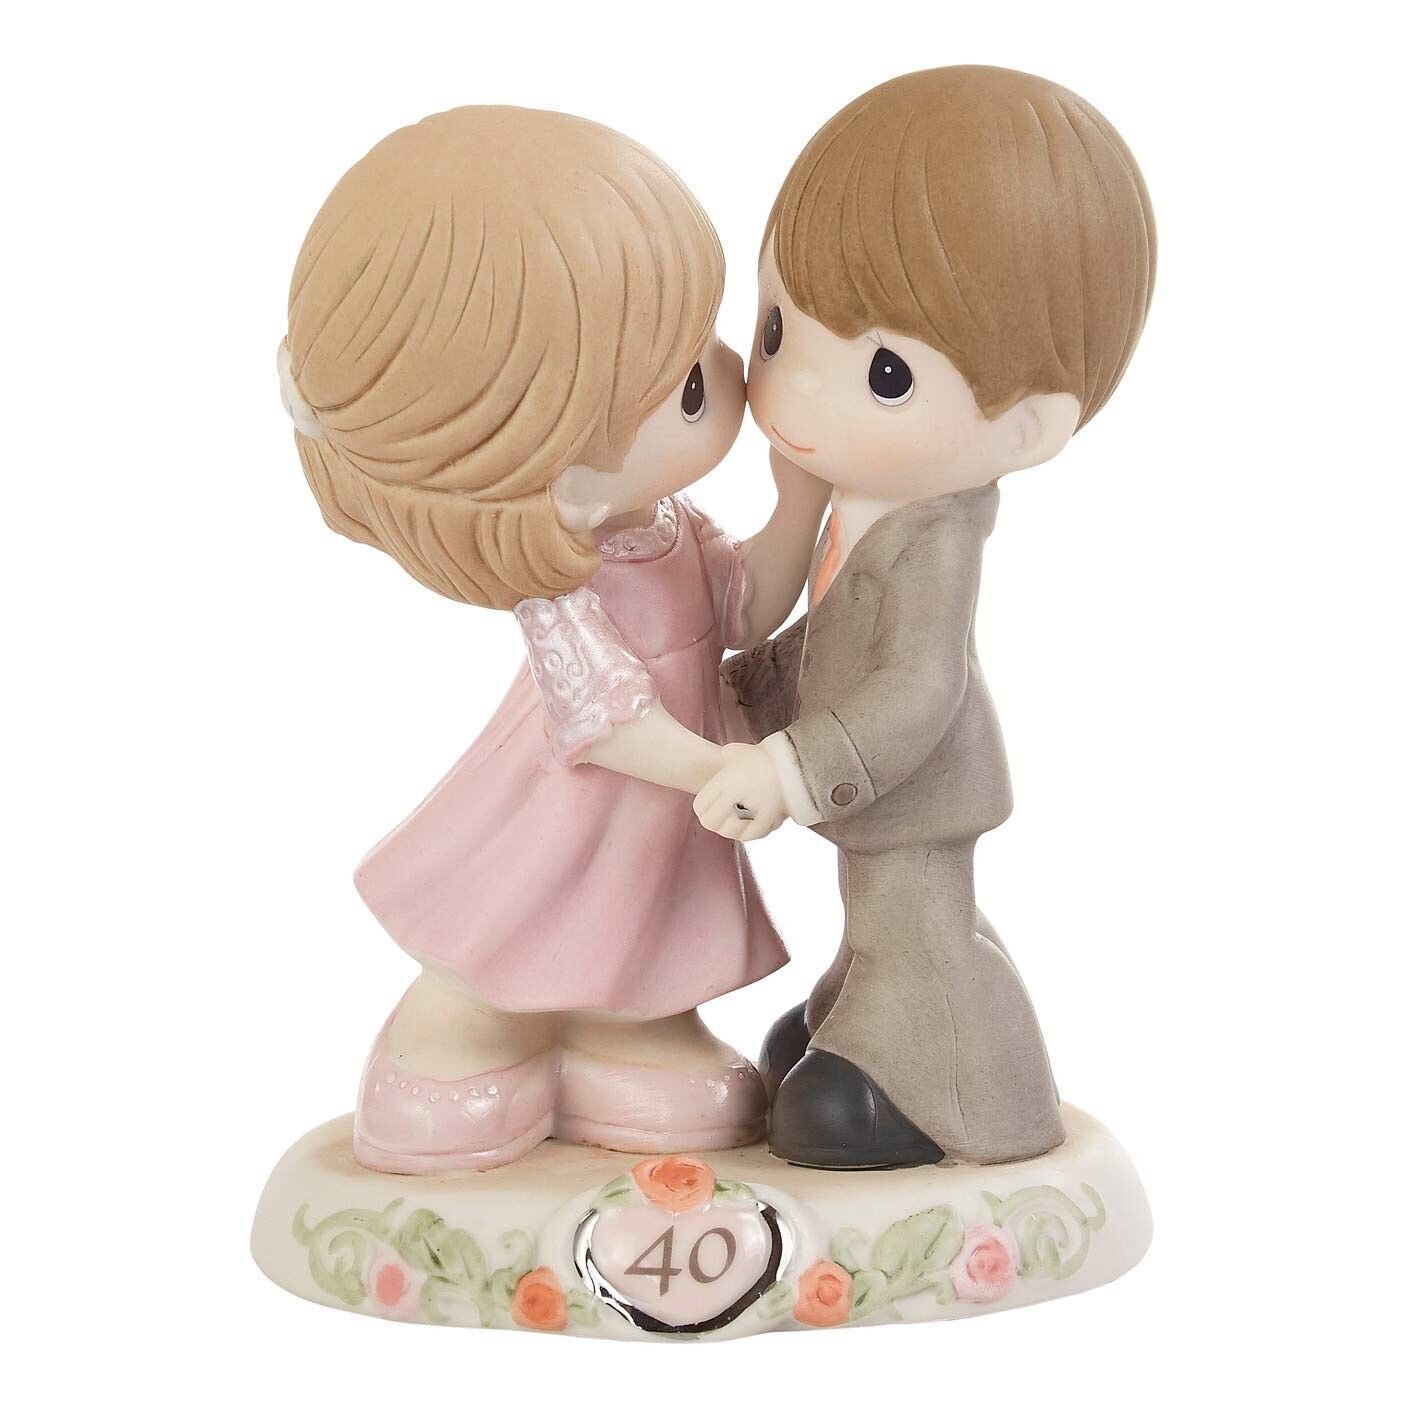 Precious Moment Figurine 40th Wedding Anniversary Couple Dancing 113008